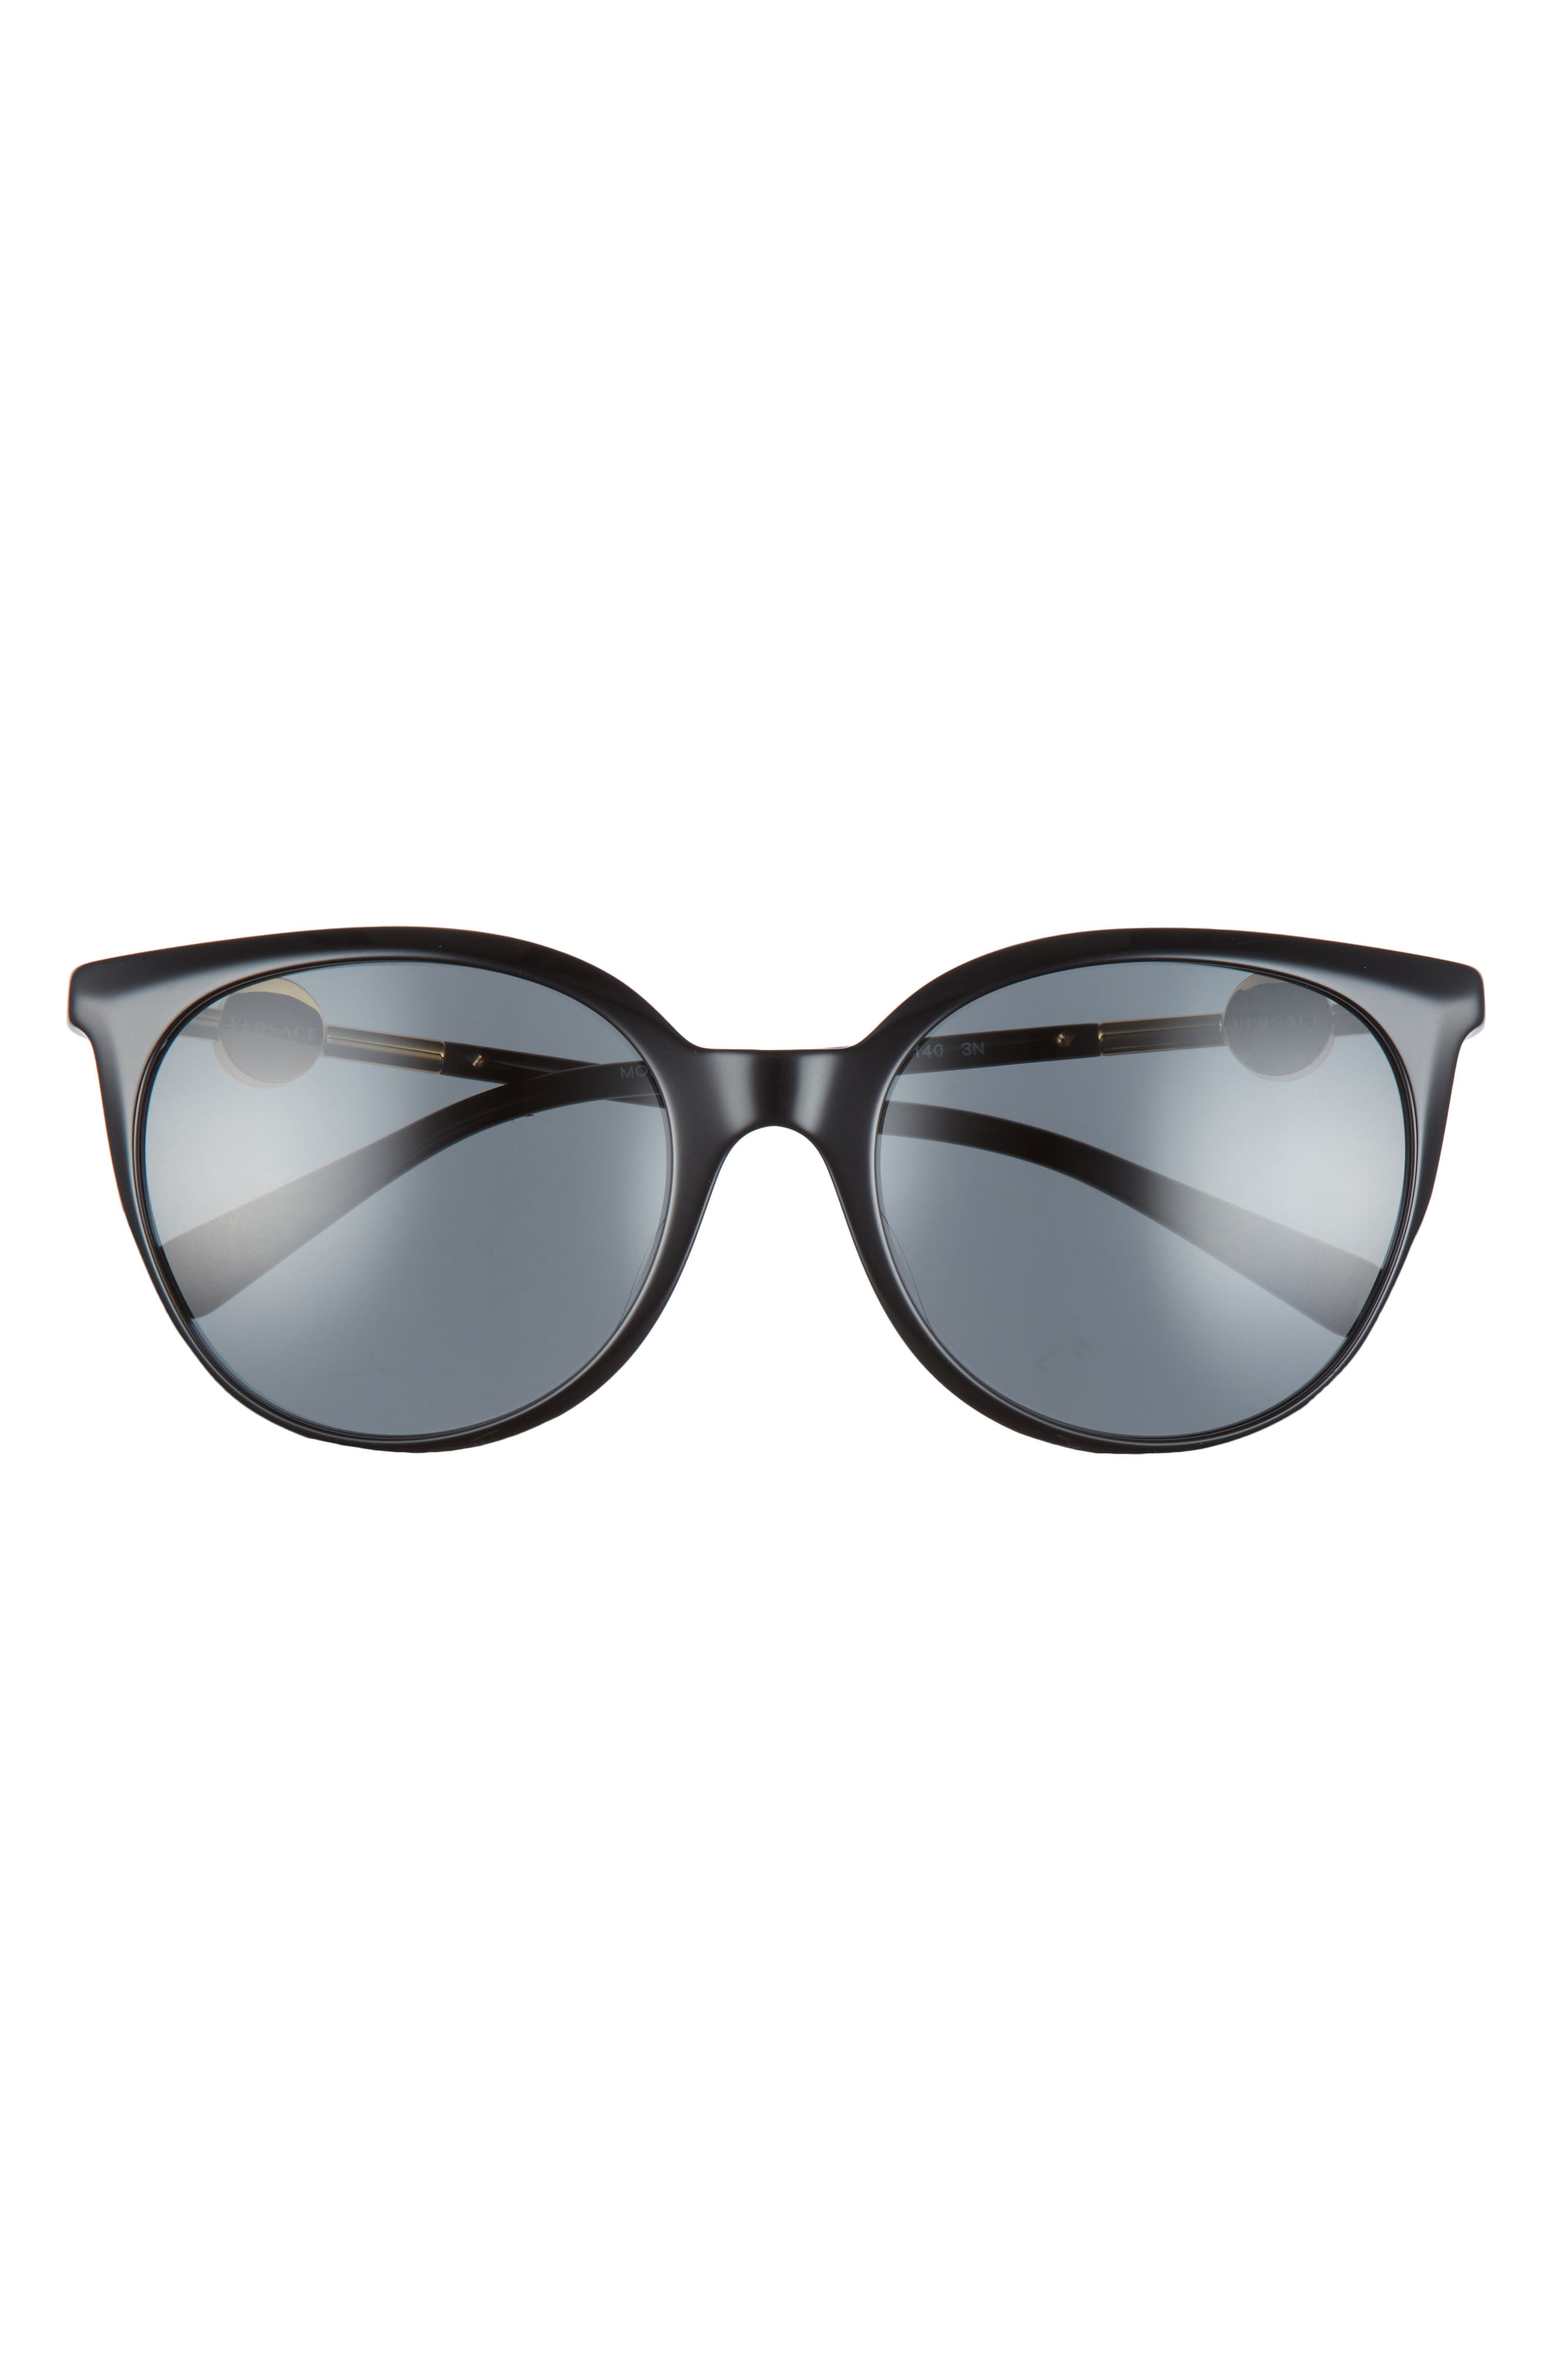 Versace Phantos 55mm Round Sunglasses in Black/Dark Grey at Nordstrom